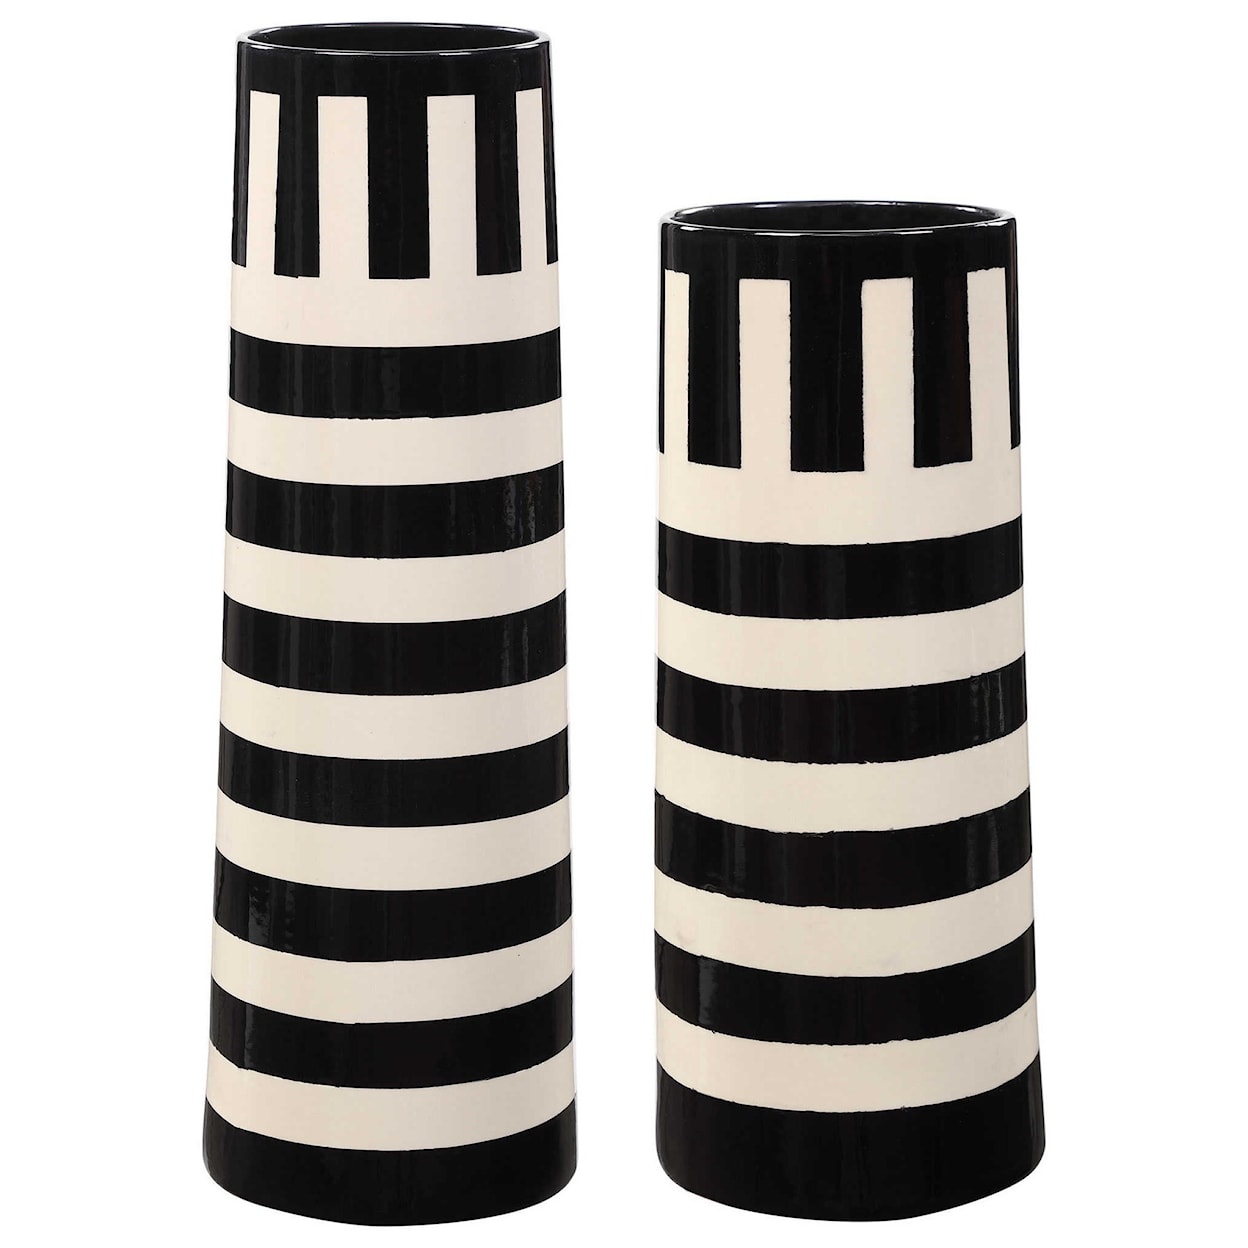 Uttermost Accessories - Vases and Urns Black & White Vases, S/2